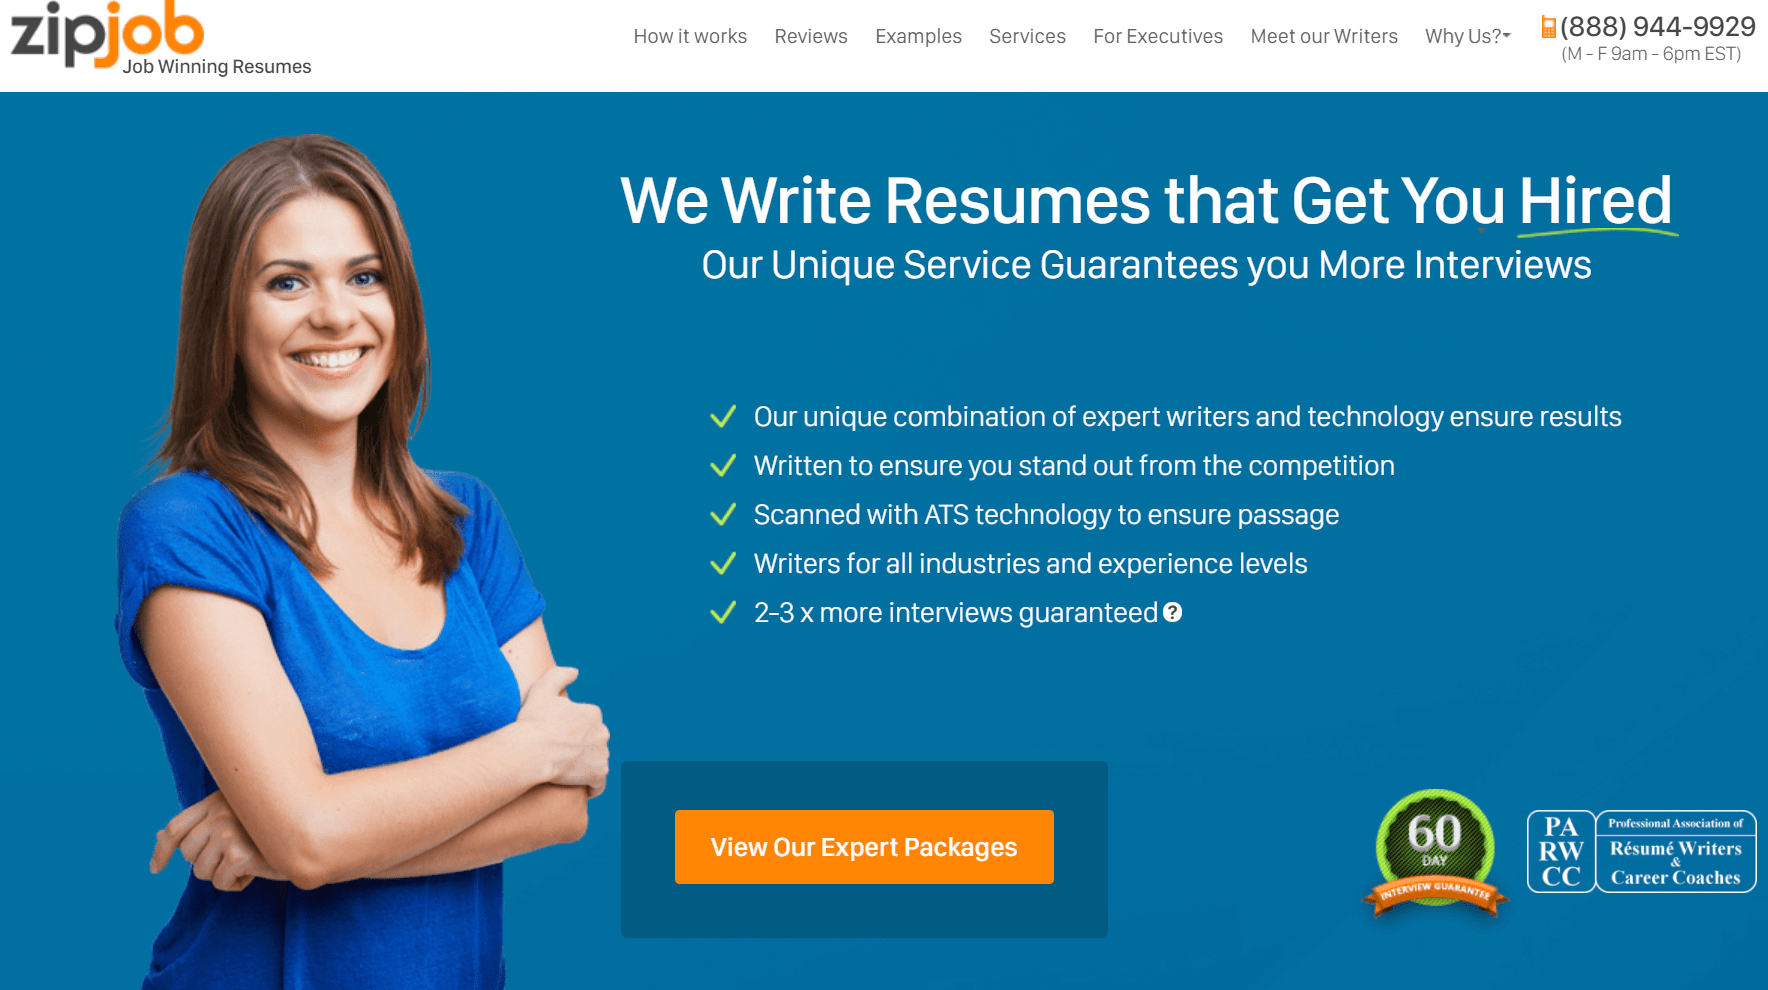 zipjob resume writing company